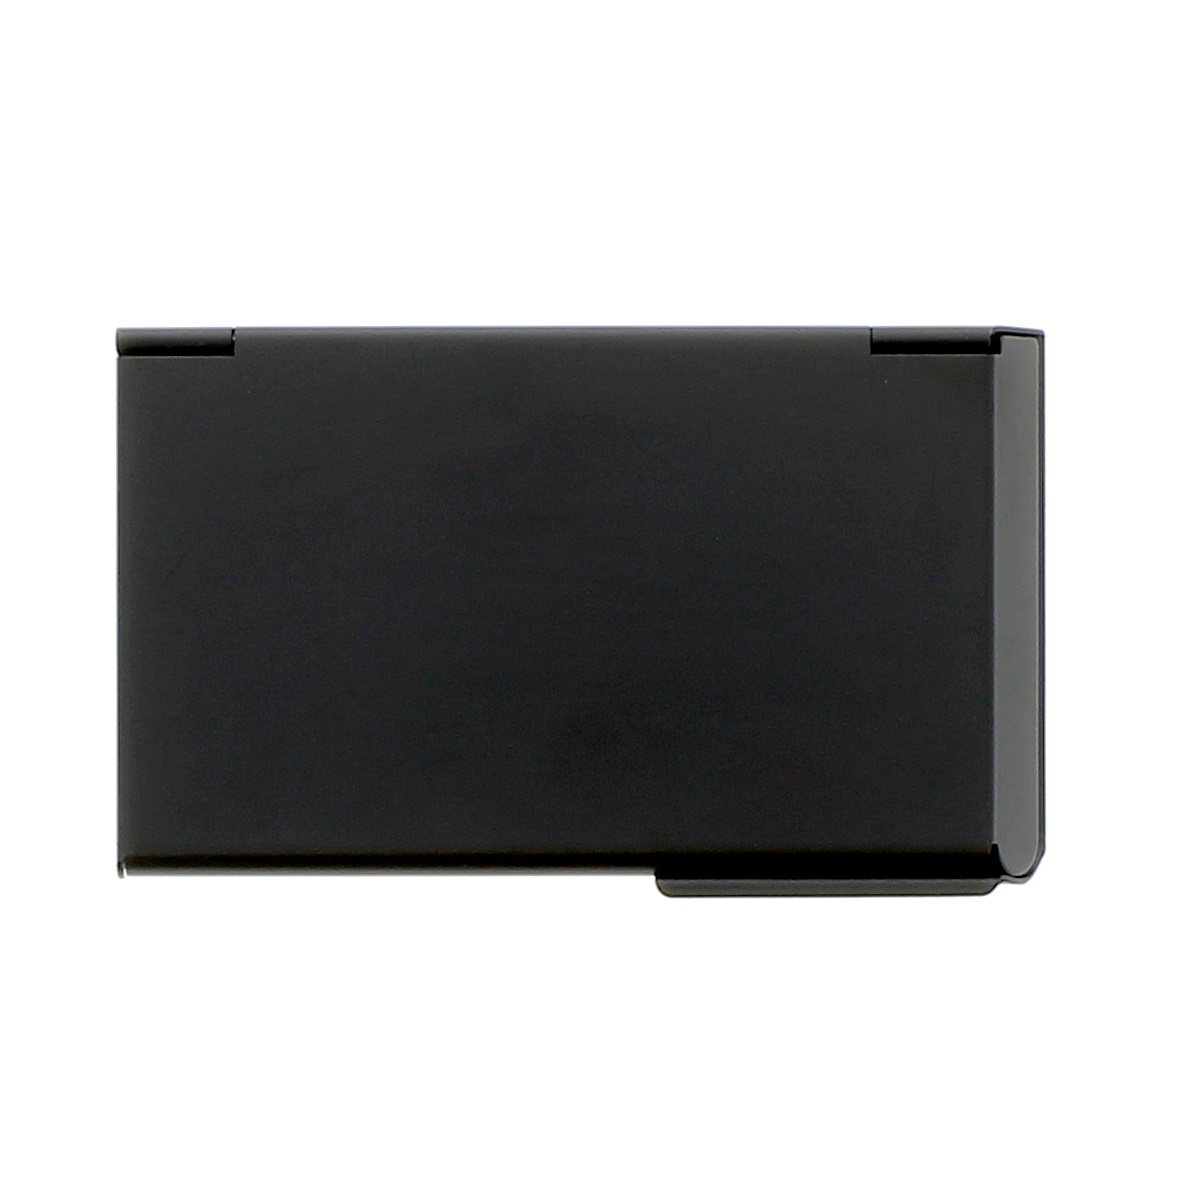 OGON Aluminum Business card holder One Touch - Black